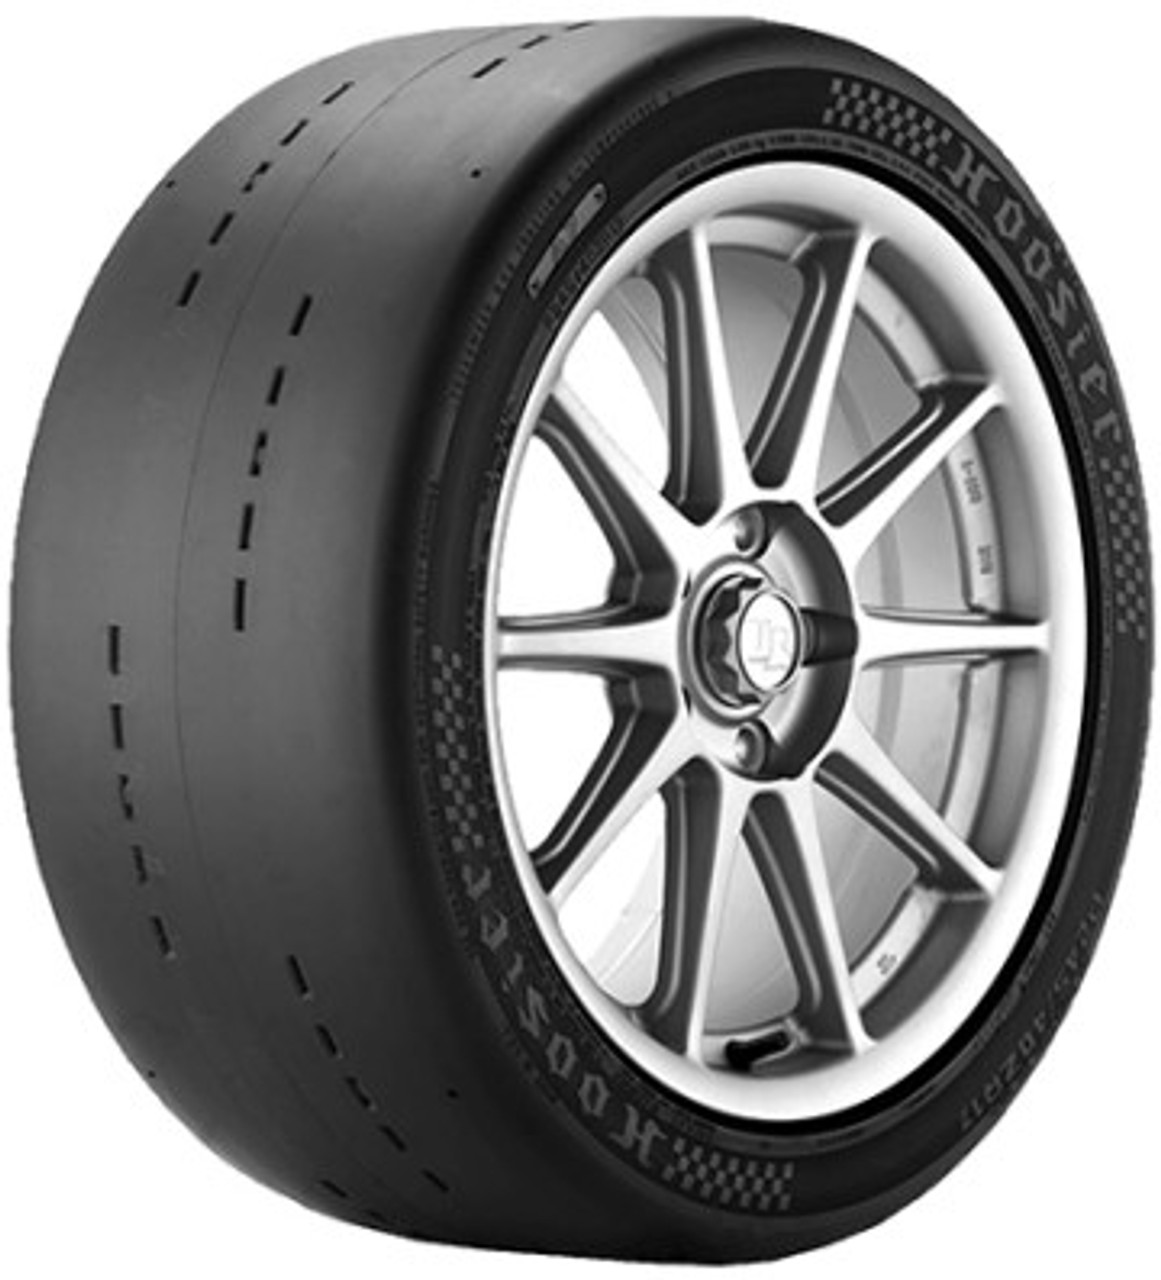 Hoosier D.O.T. Radial Drag Racing Tire P295 50R16 17326DR2